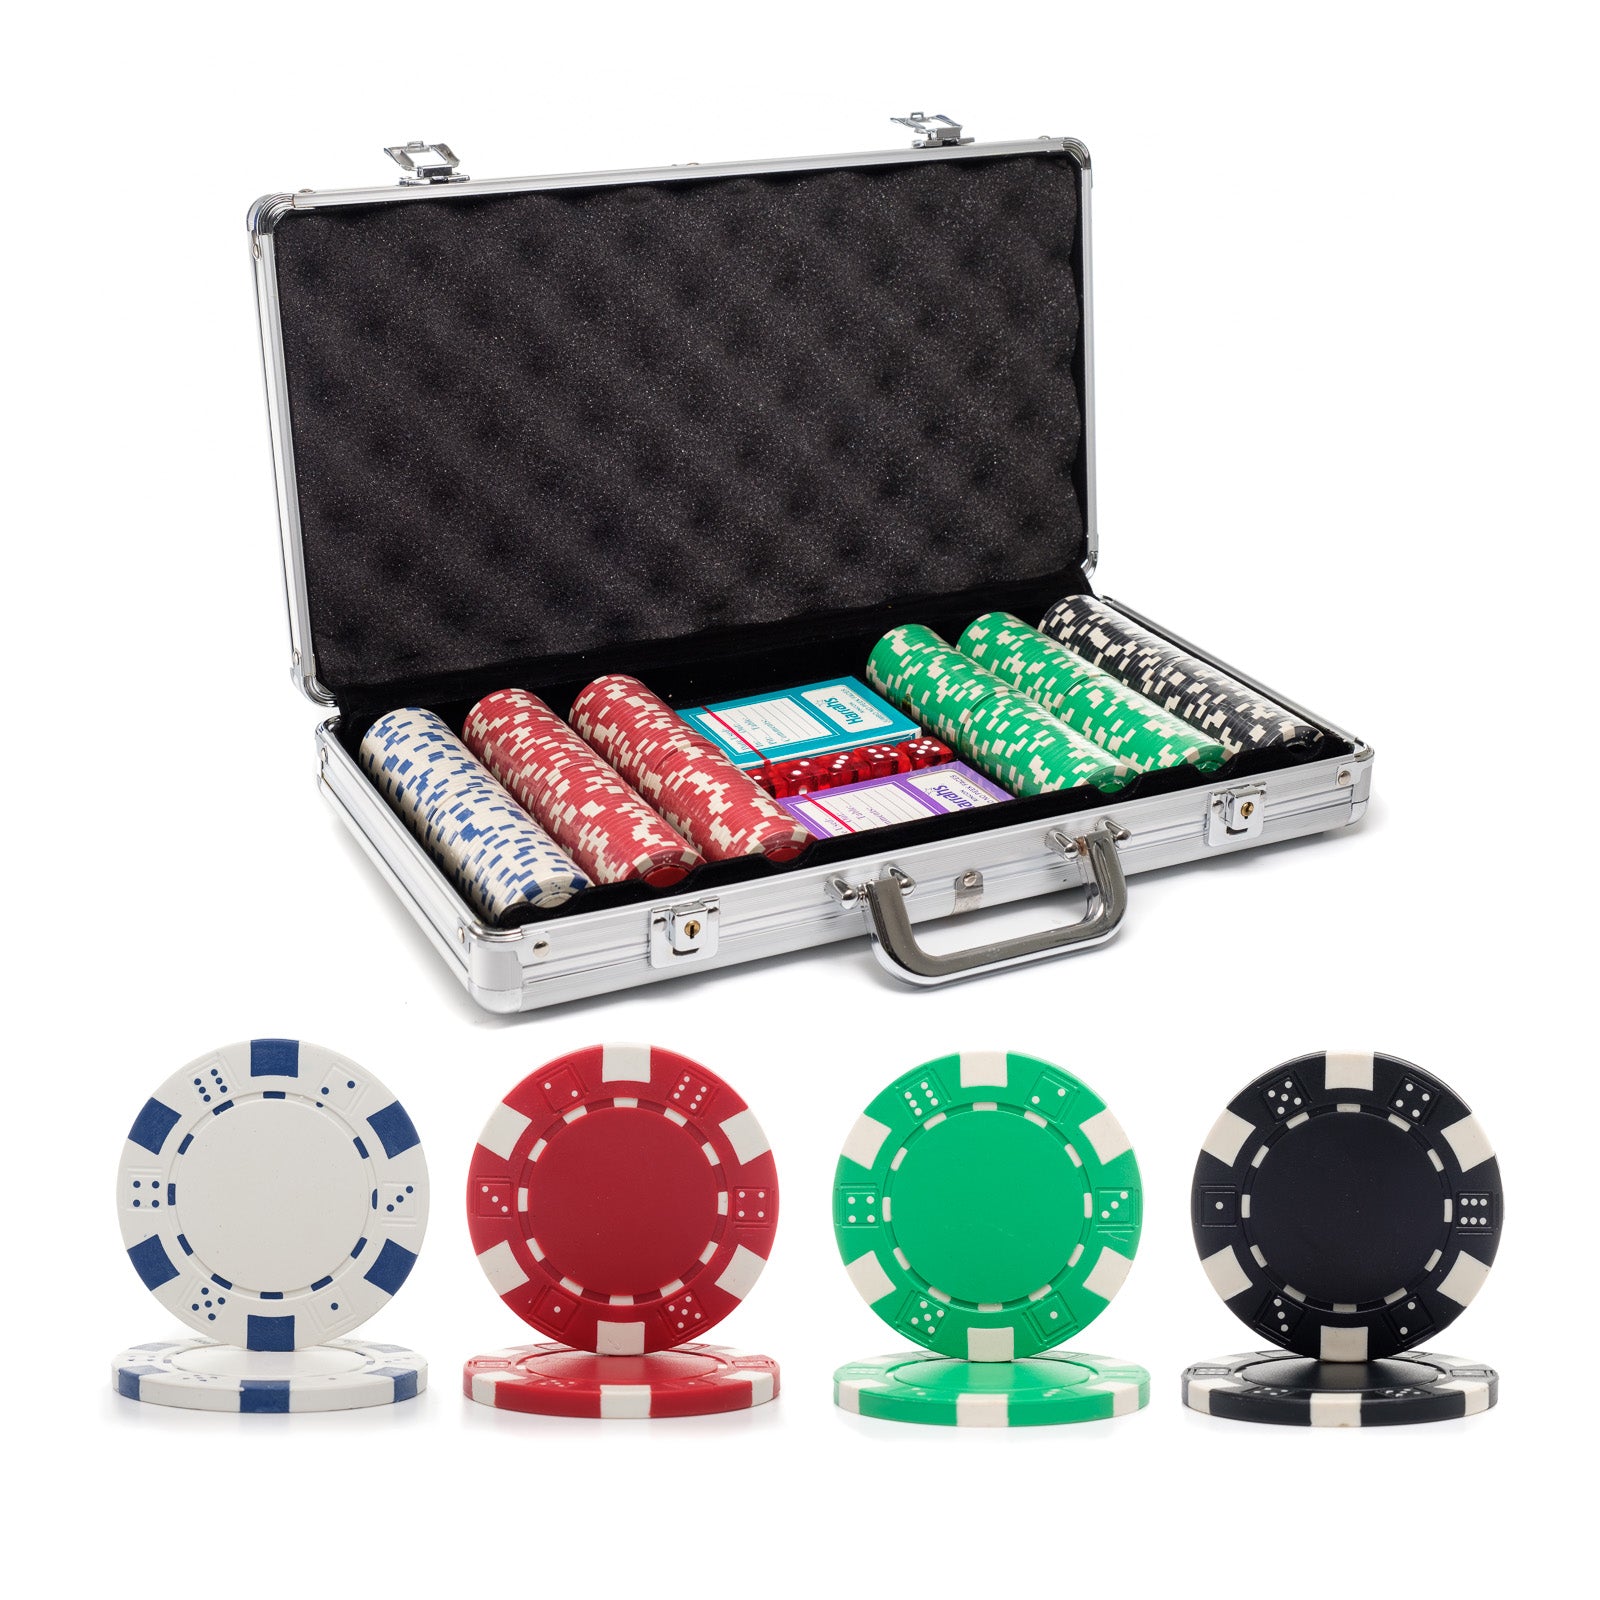 300 pc. 11.5g Dice Rim Poker Chip Set with Aluminum Case